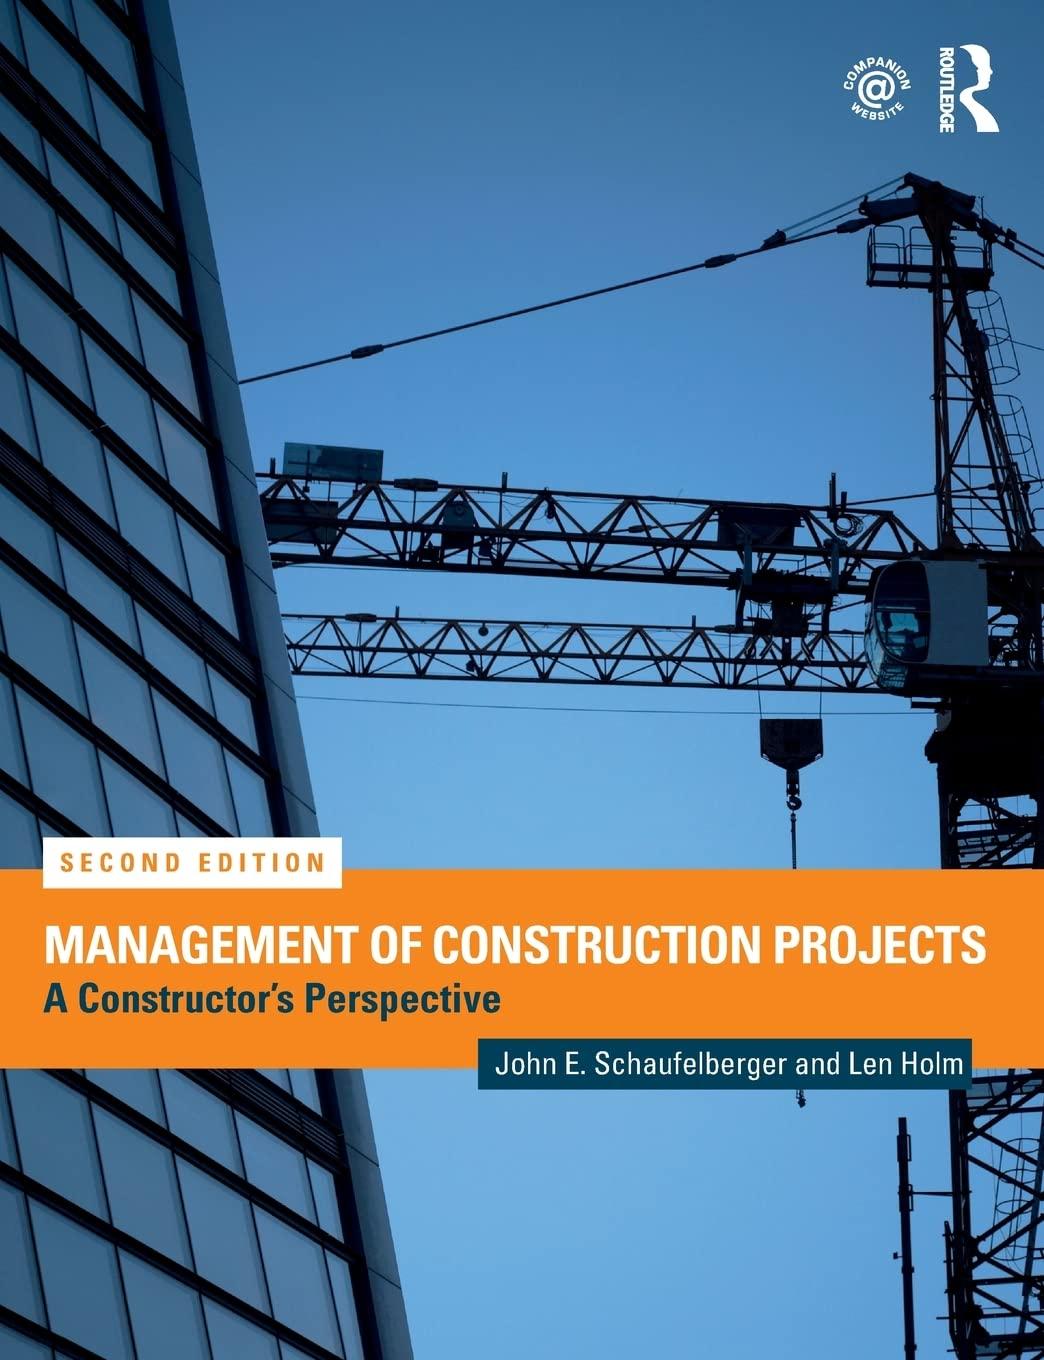 management of construction projects a constructors perspective 2nd edition len holm, john e. schaufelberger